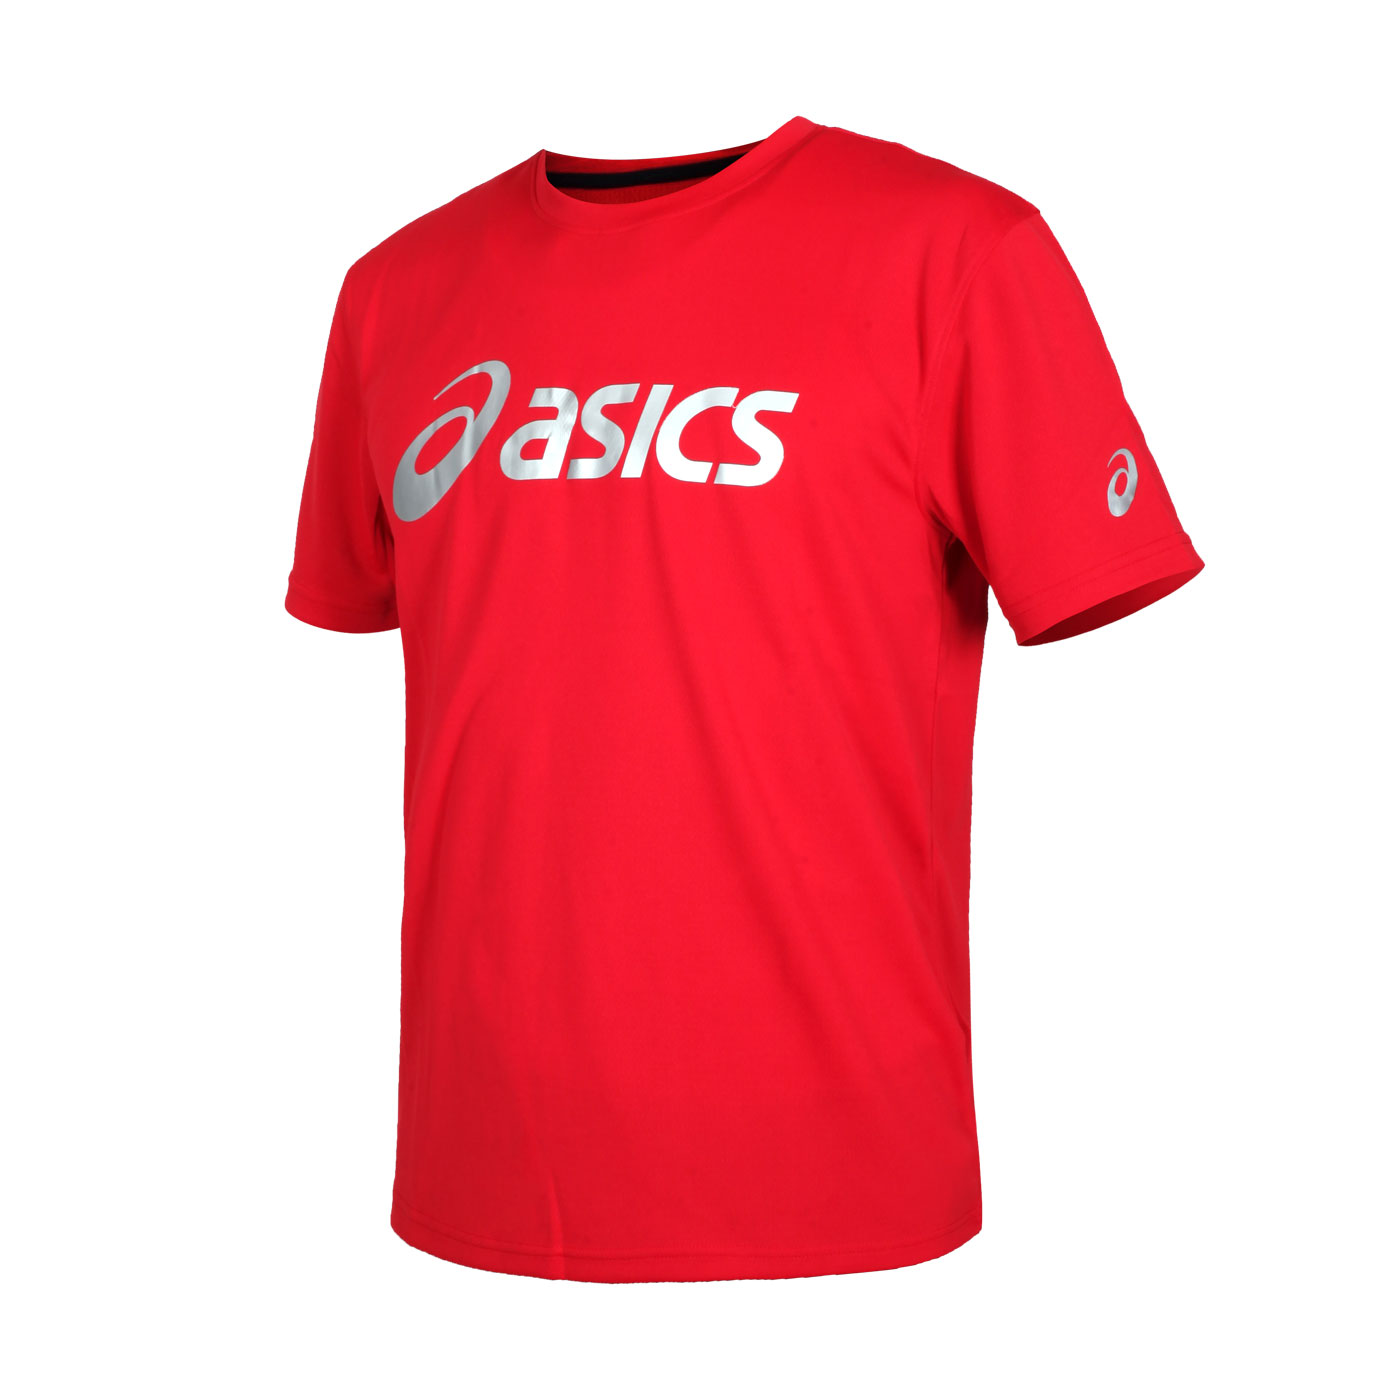 ASICS 運動排汗T恤 K31415-23 - 紅銀